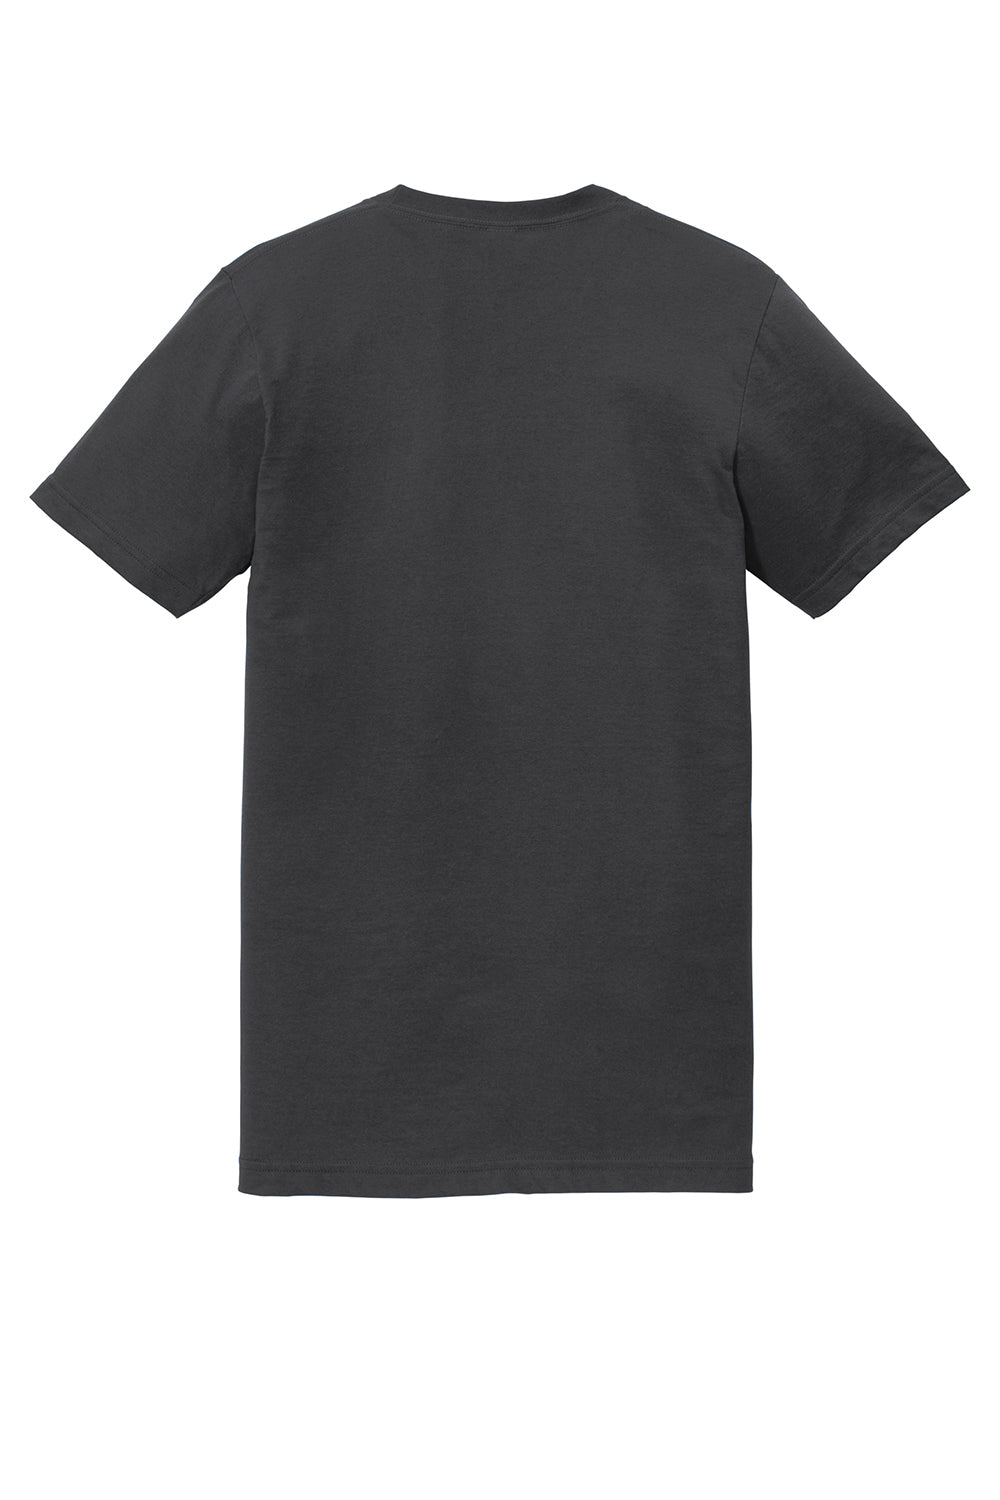 American Apparel 2001 Mens Fine Jersey Short Sleeve Crewneck T-Shirt Asphalt Grey Flat Back